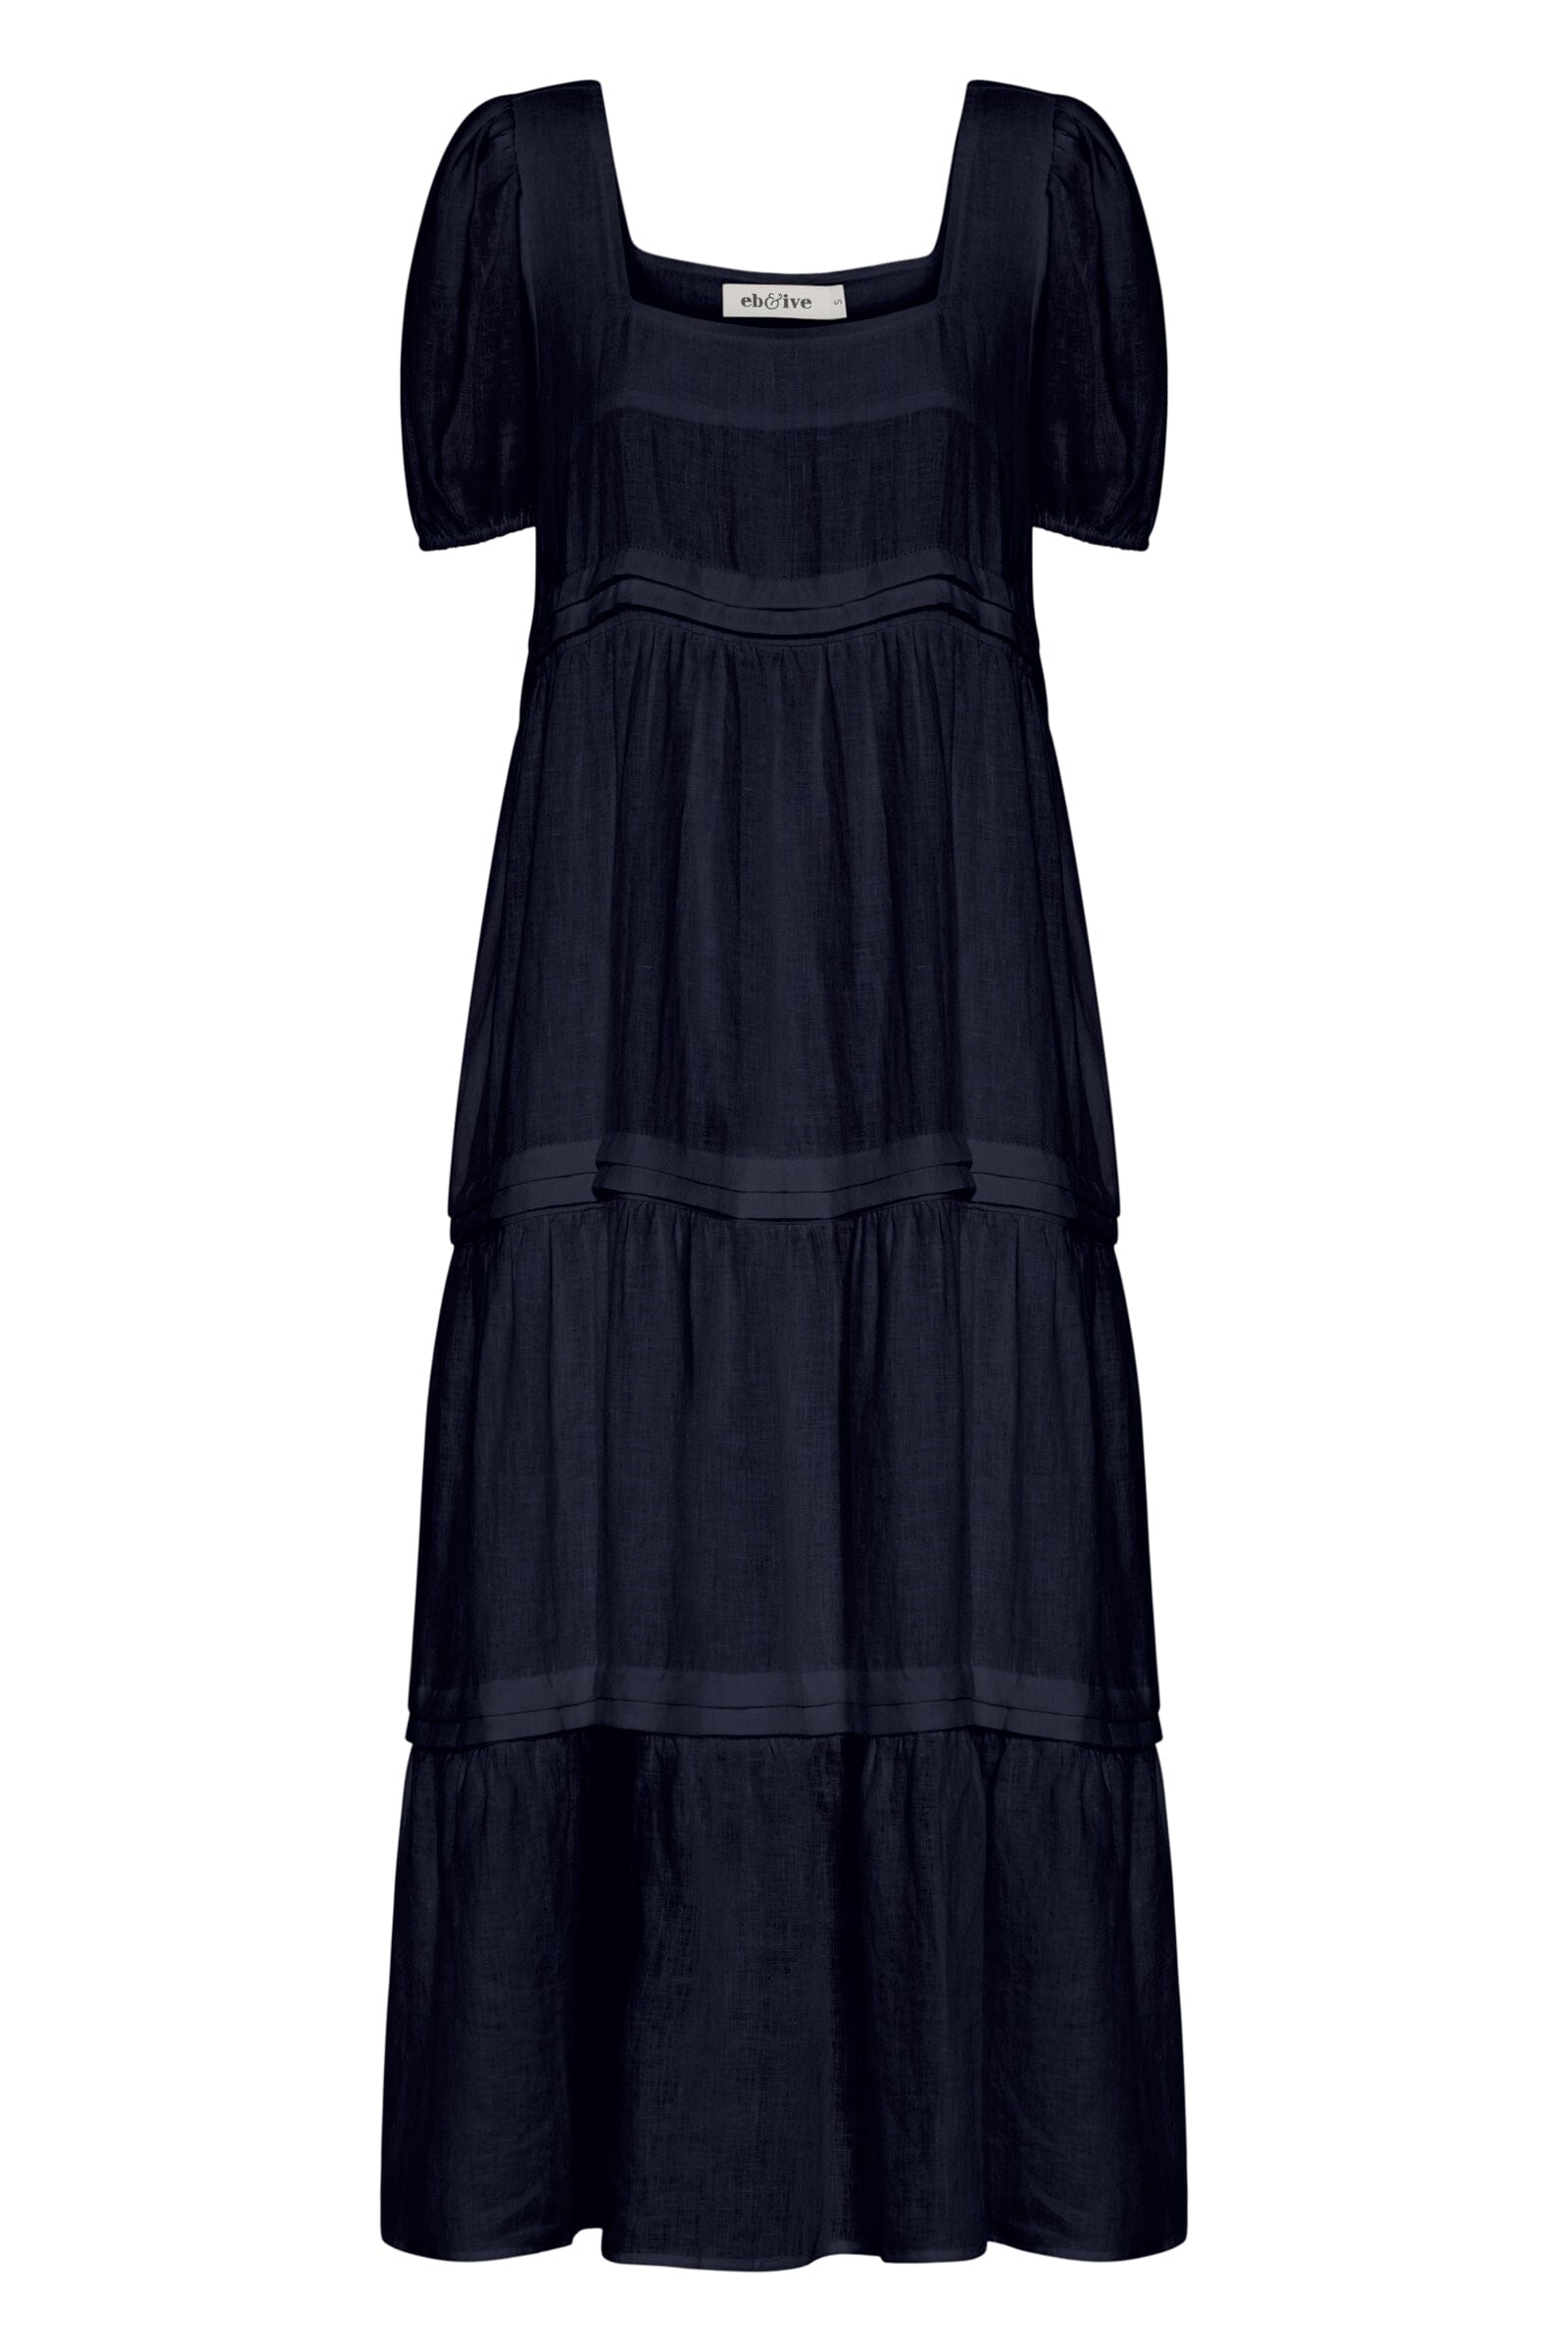 eb&ive - La Vie Pintuck Maxi Dress - Sapphire Womens eb&ive